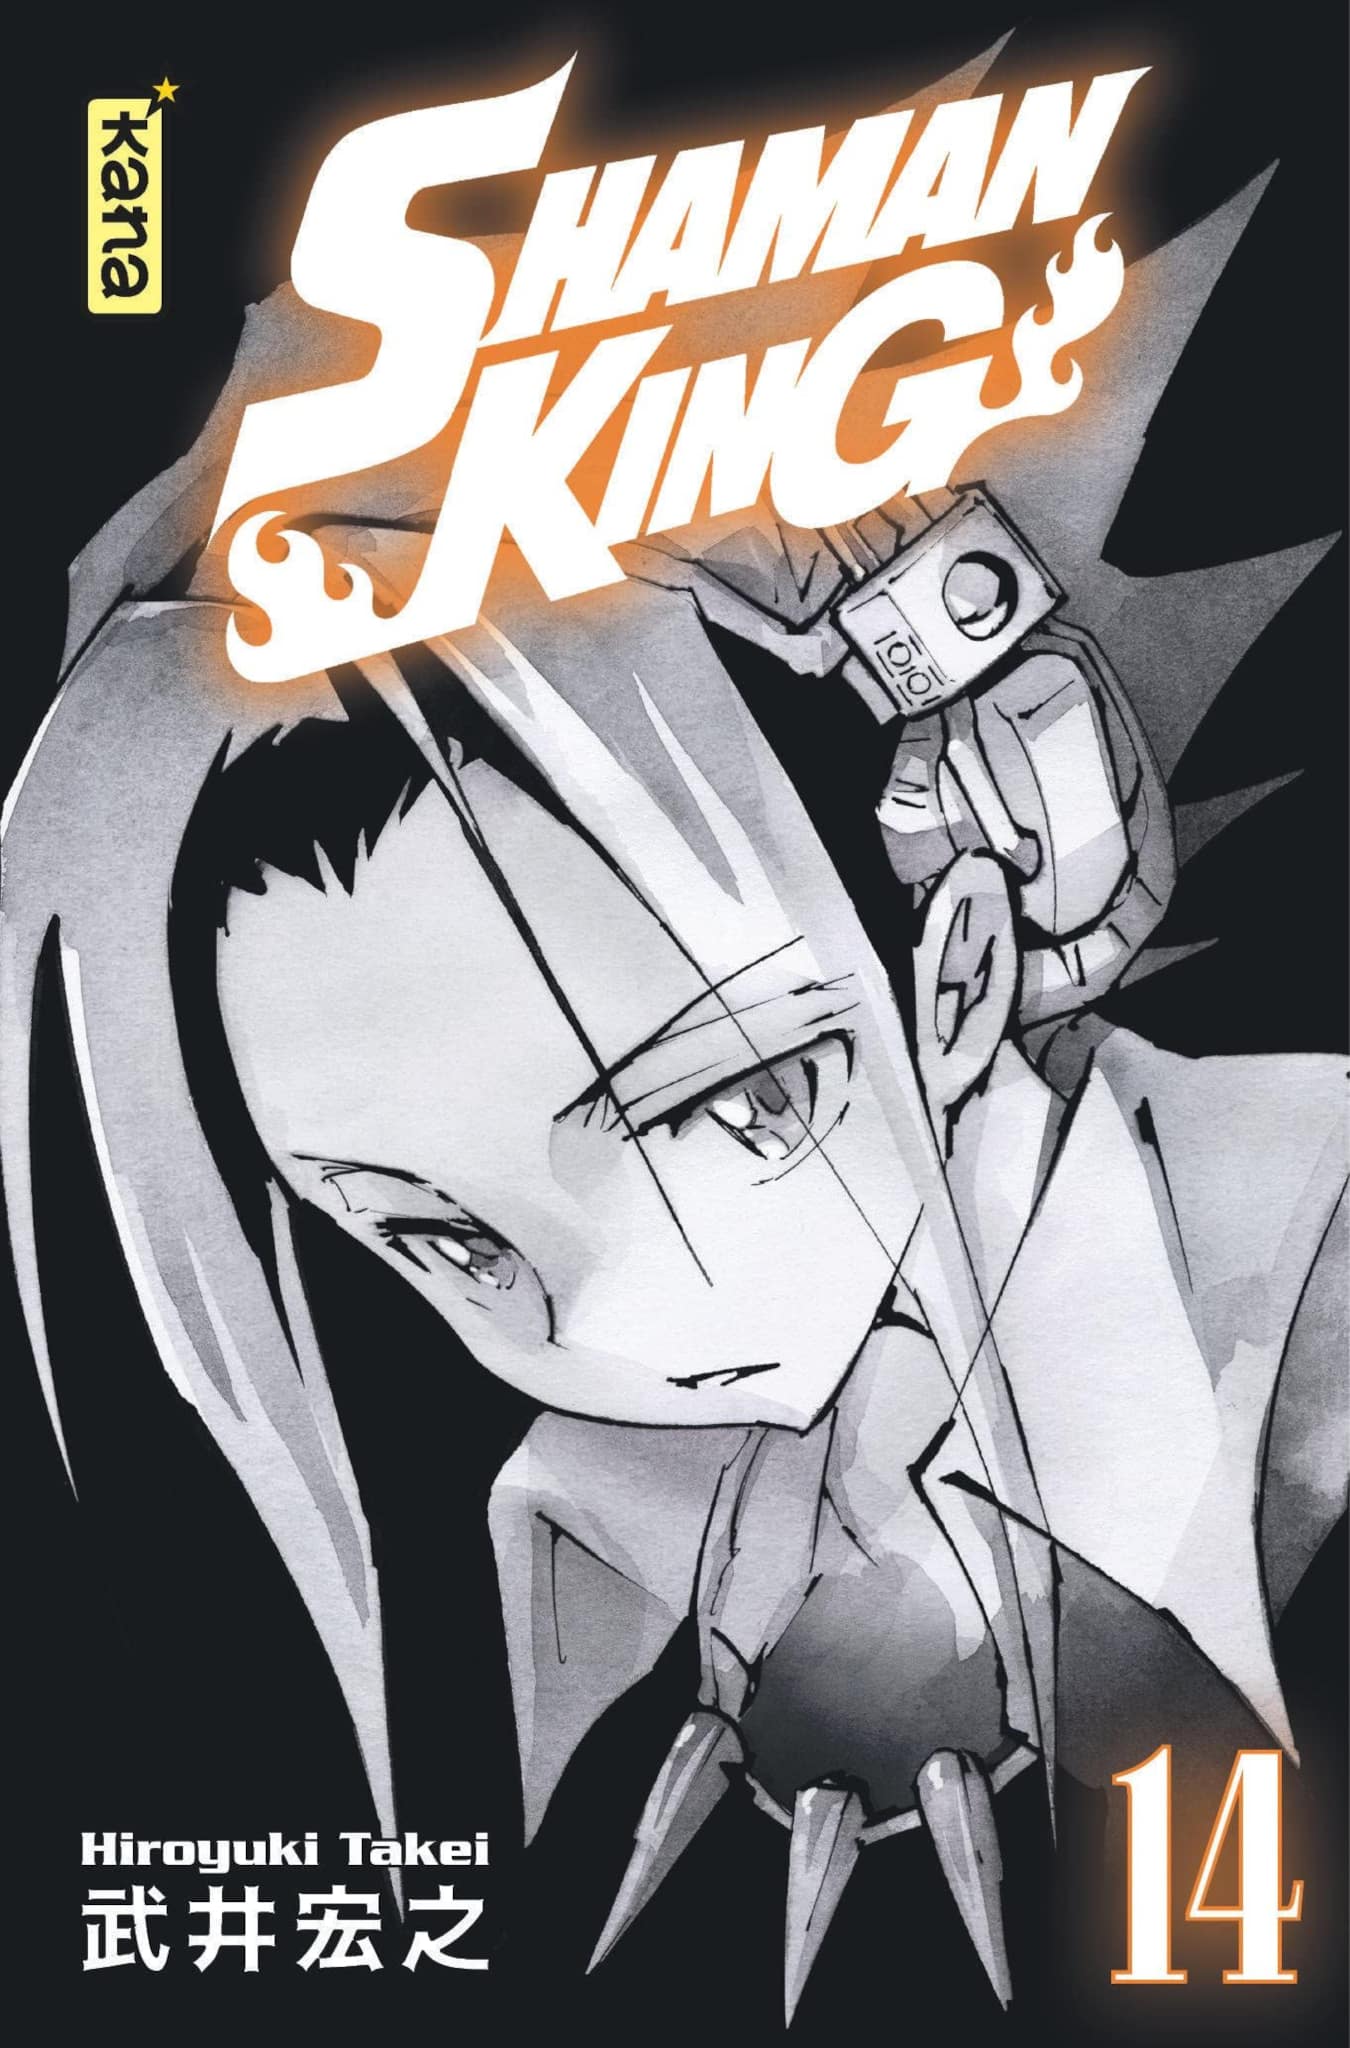 Tome 14 du manga Shaman King